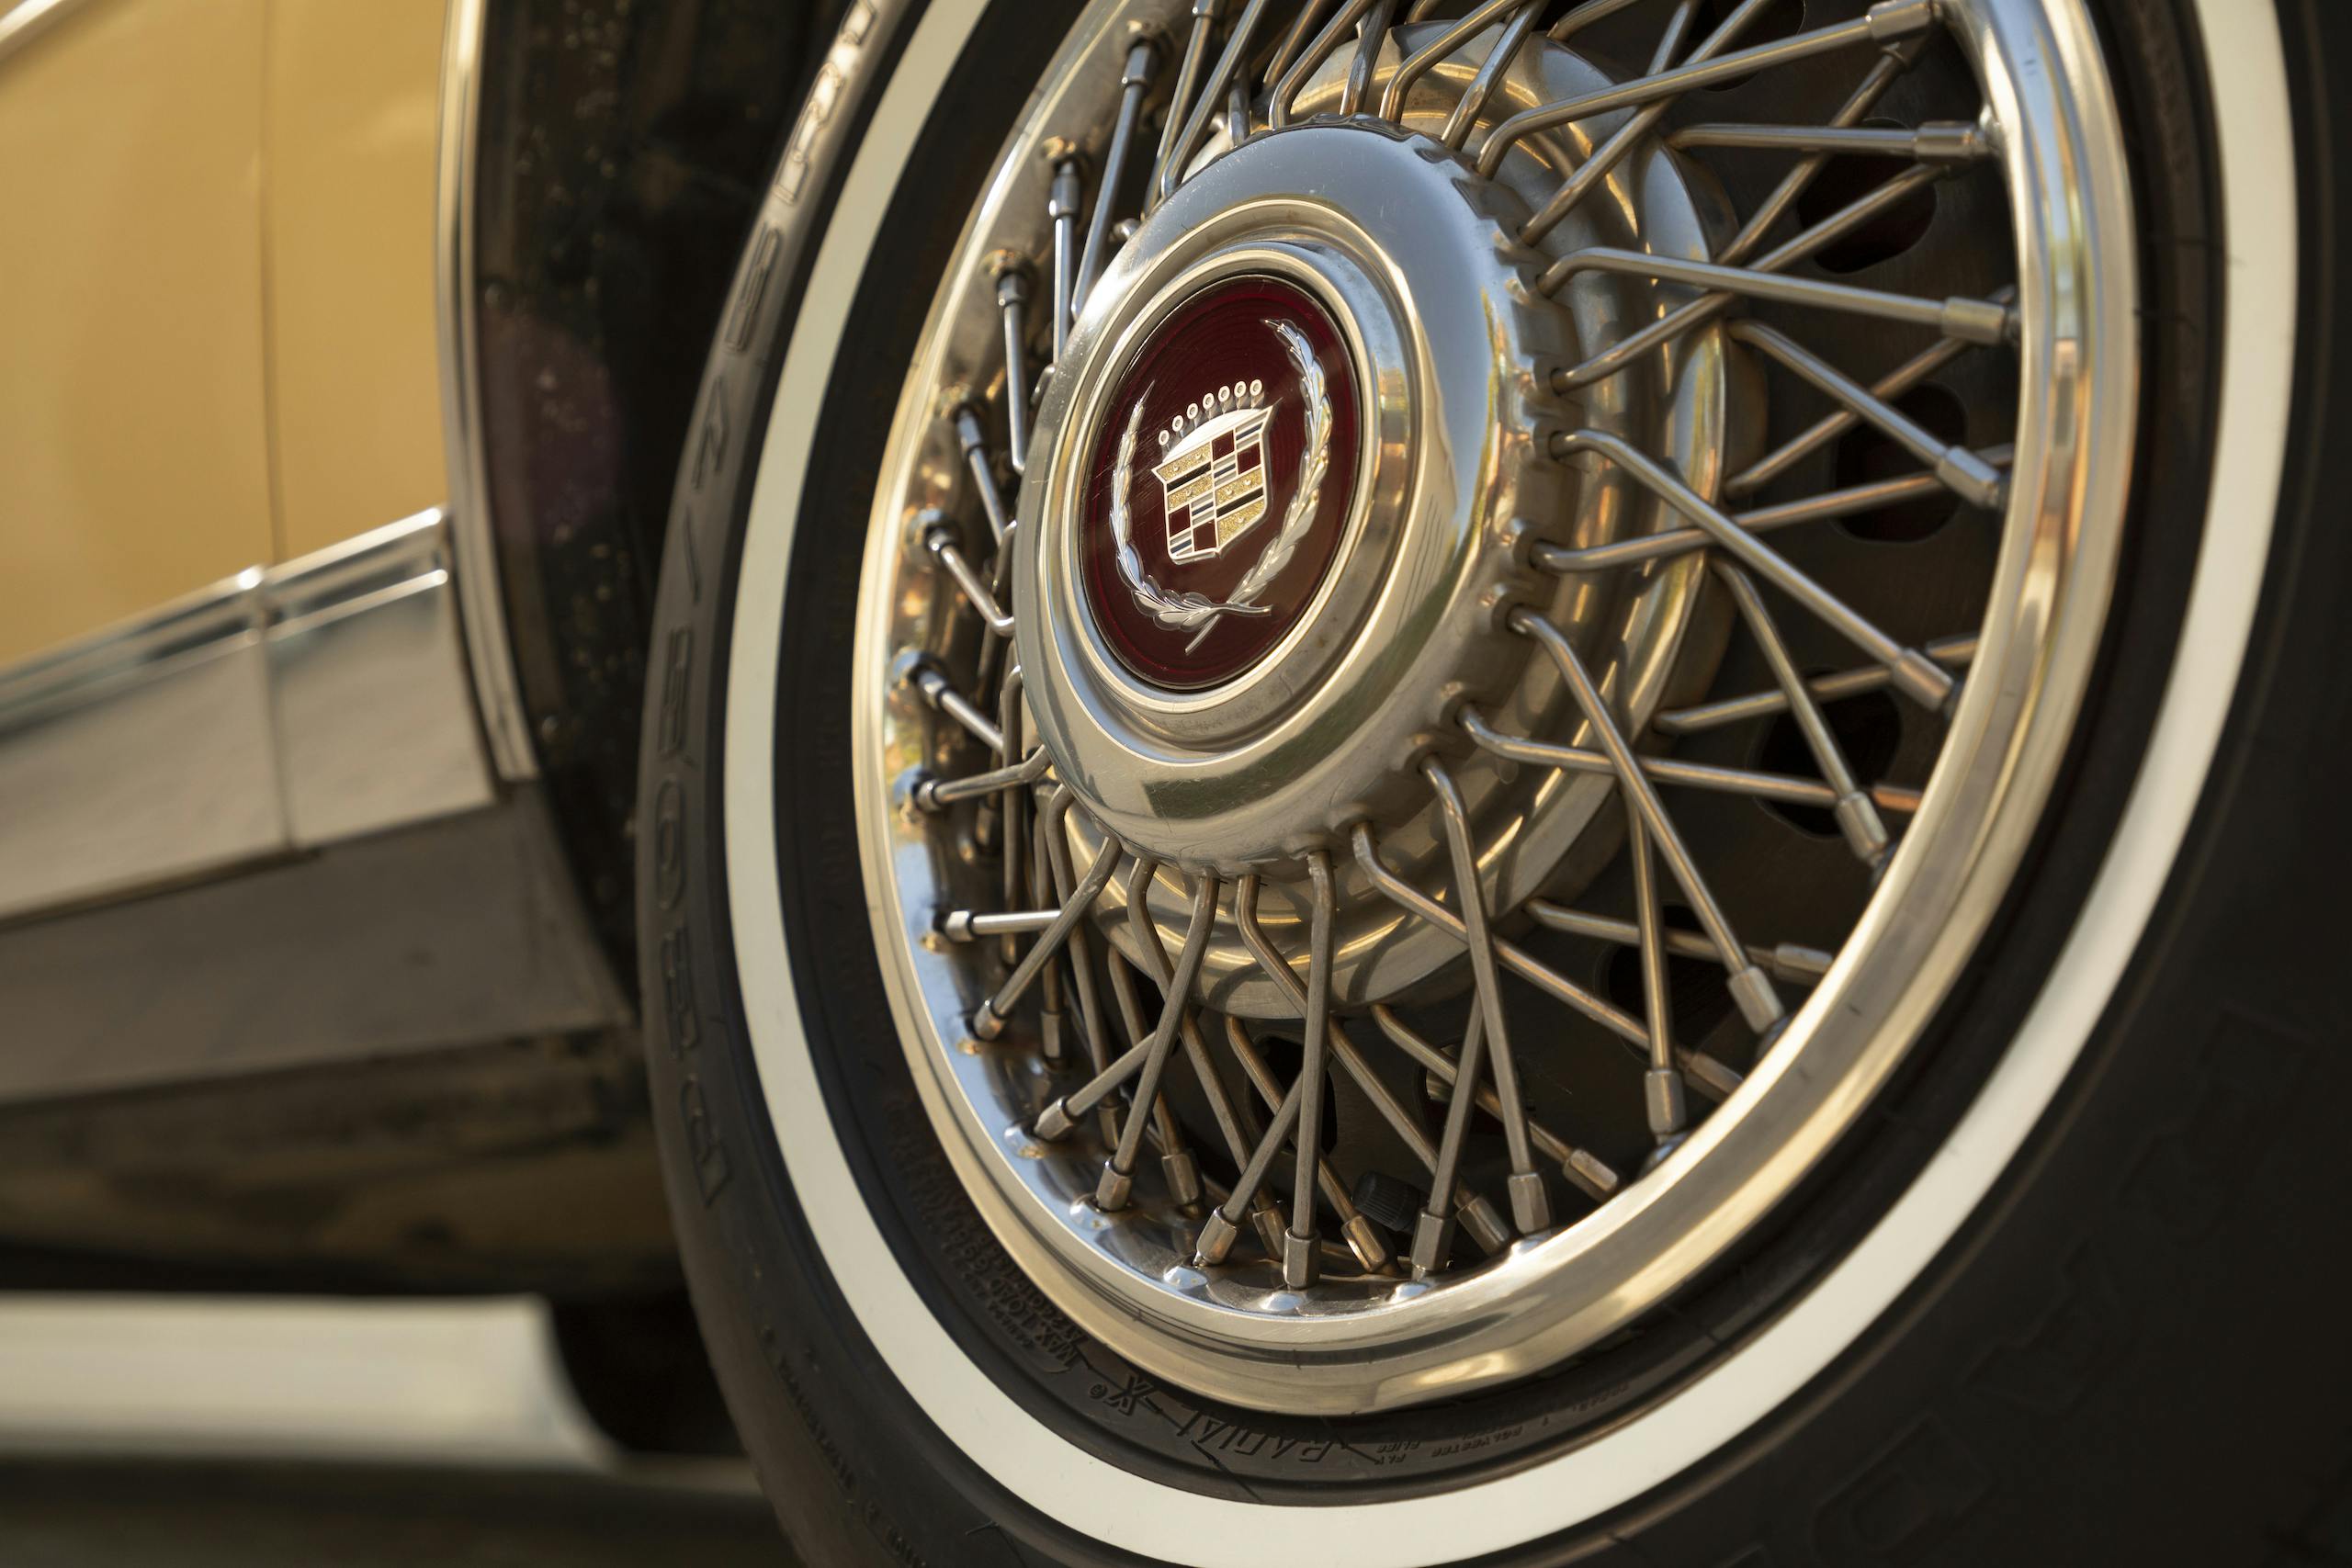 1986 Cadillac Coupe DeVille wheel detail